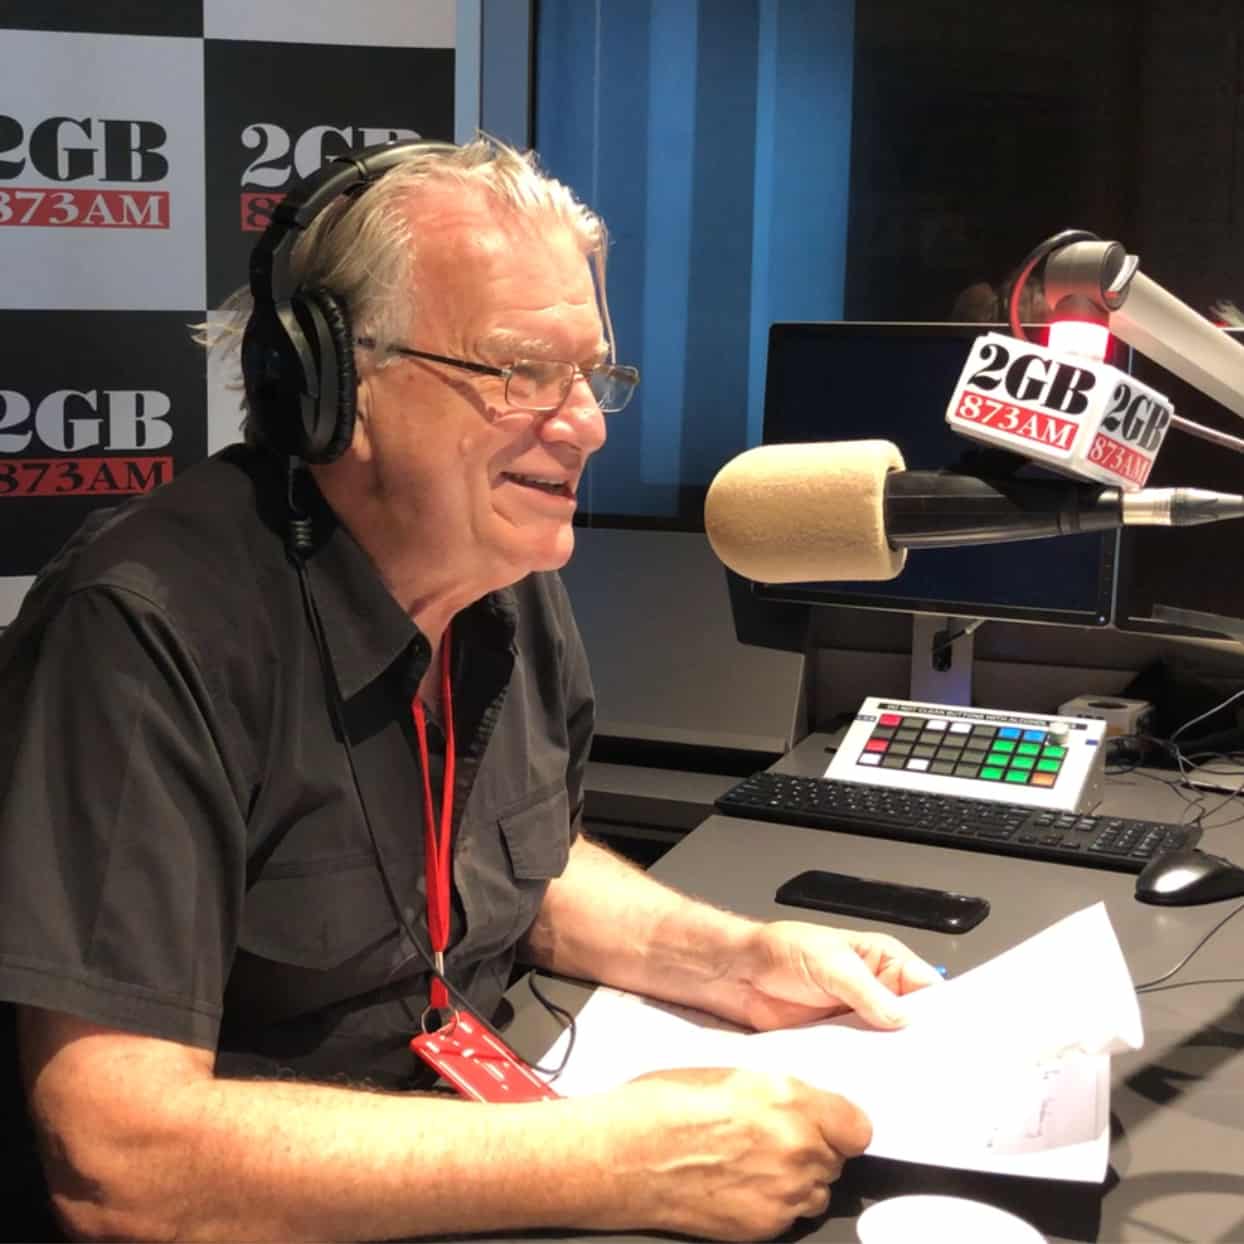 Rev. Bill Crews behind the microphone at radio station 2GB in Sydney.